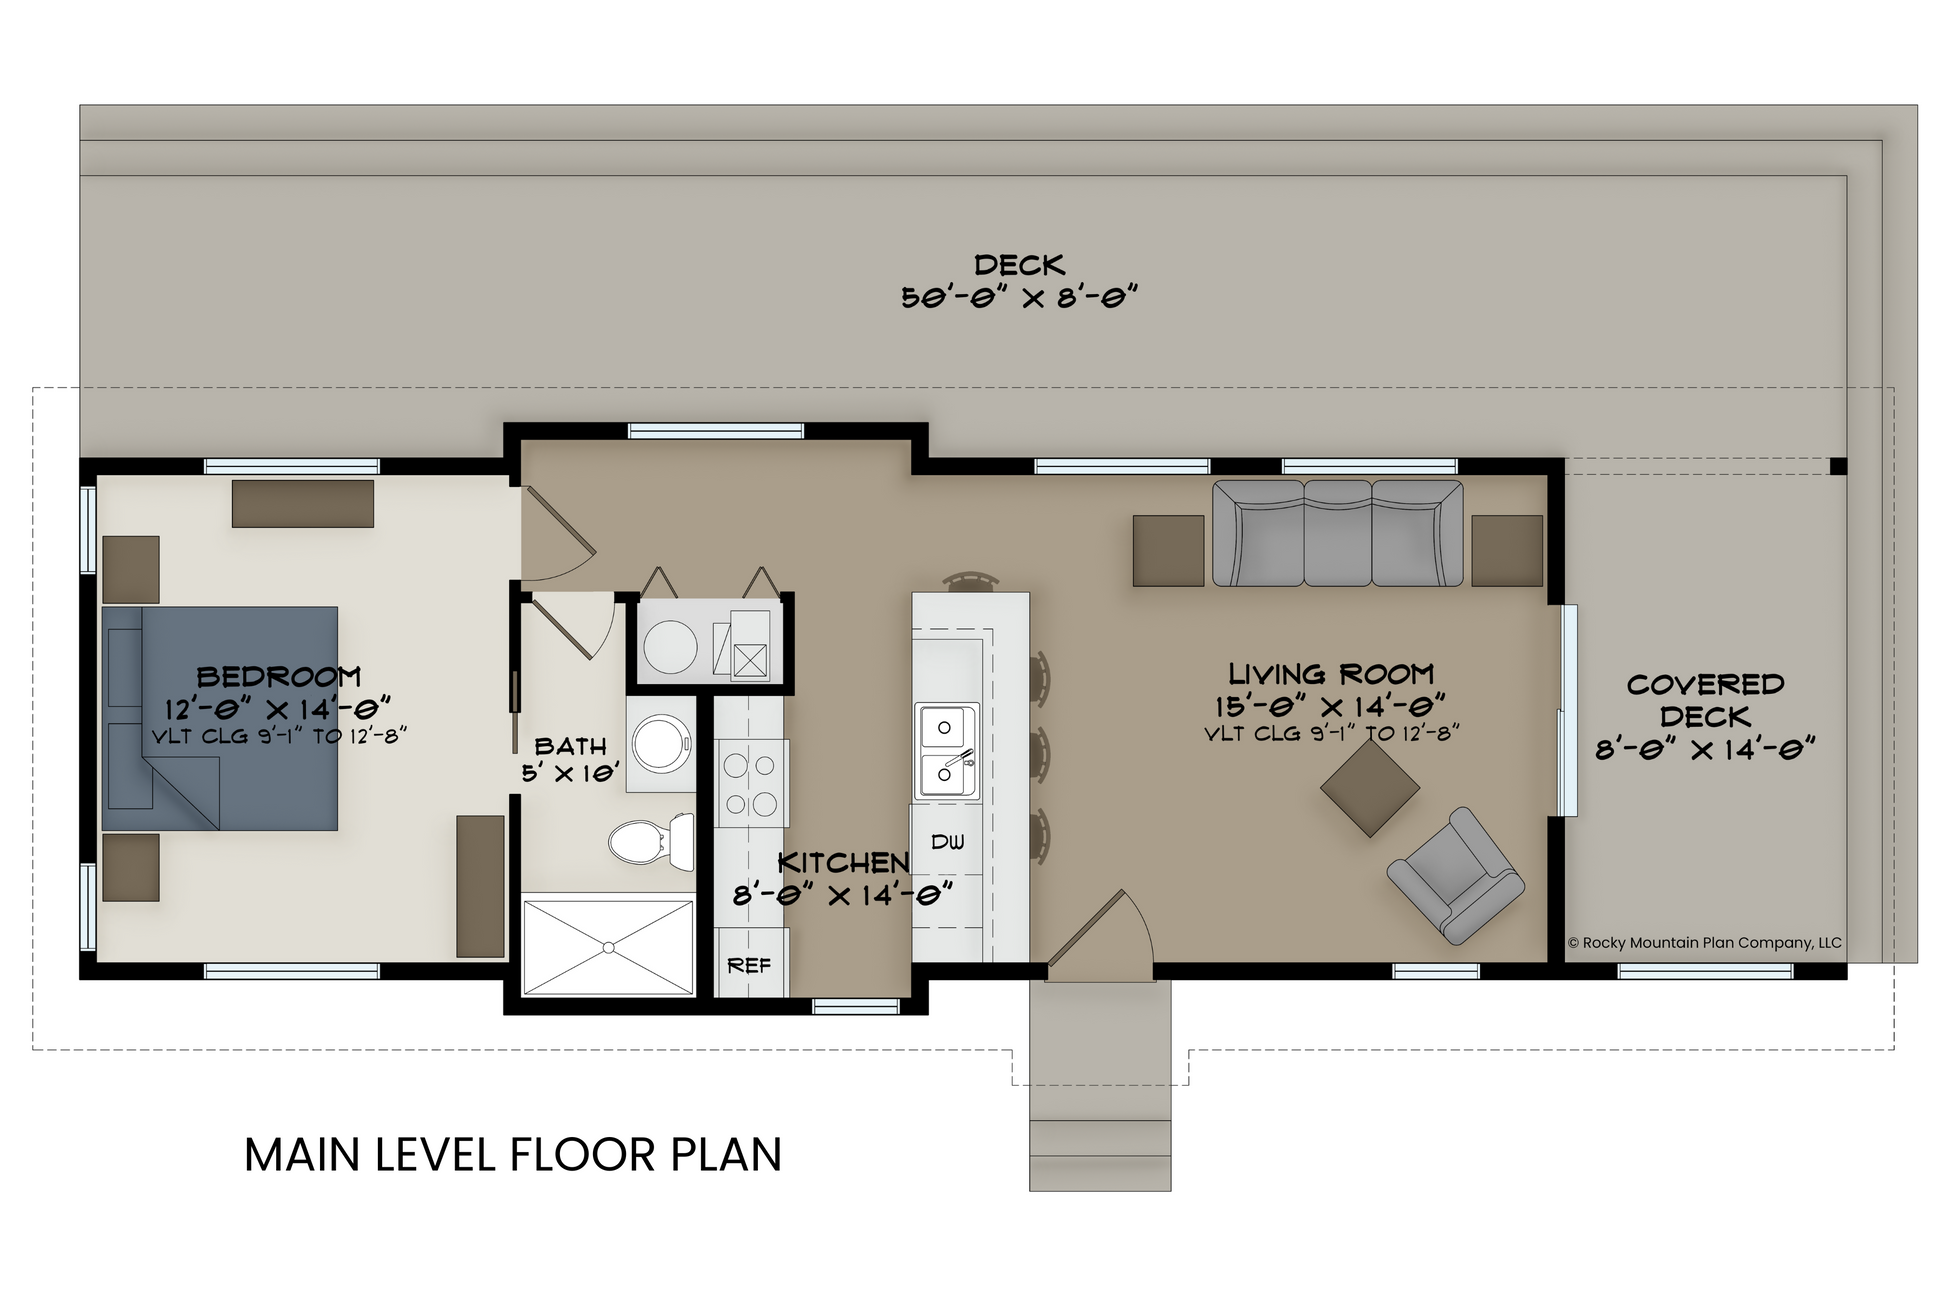 Contemporary-Tiny-Home-Plan-Main-Level-Floor-Plan-Rocky-Mountain-Plan-Company-Snapdragon